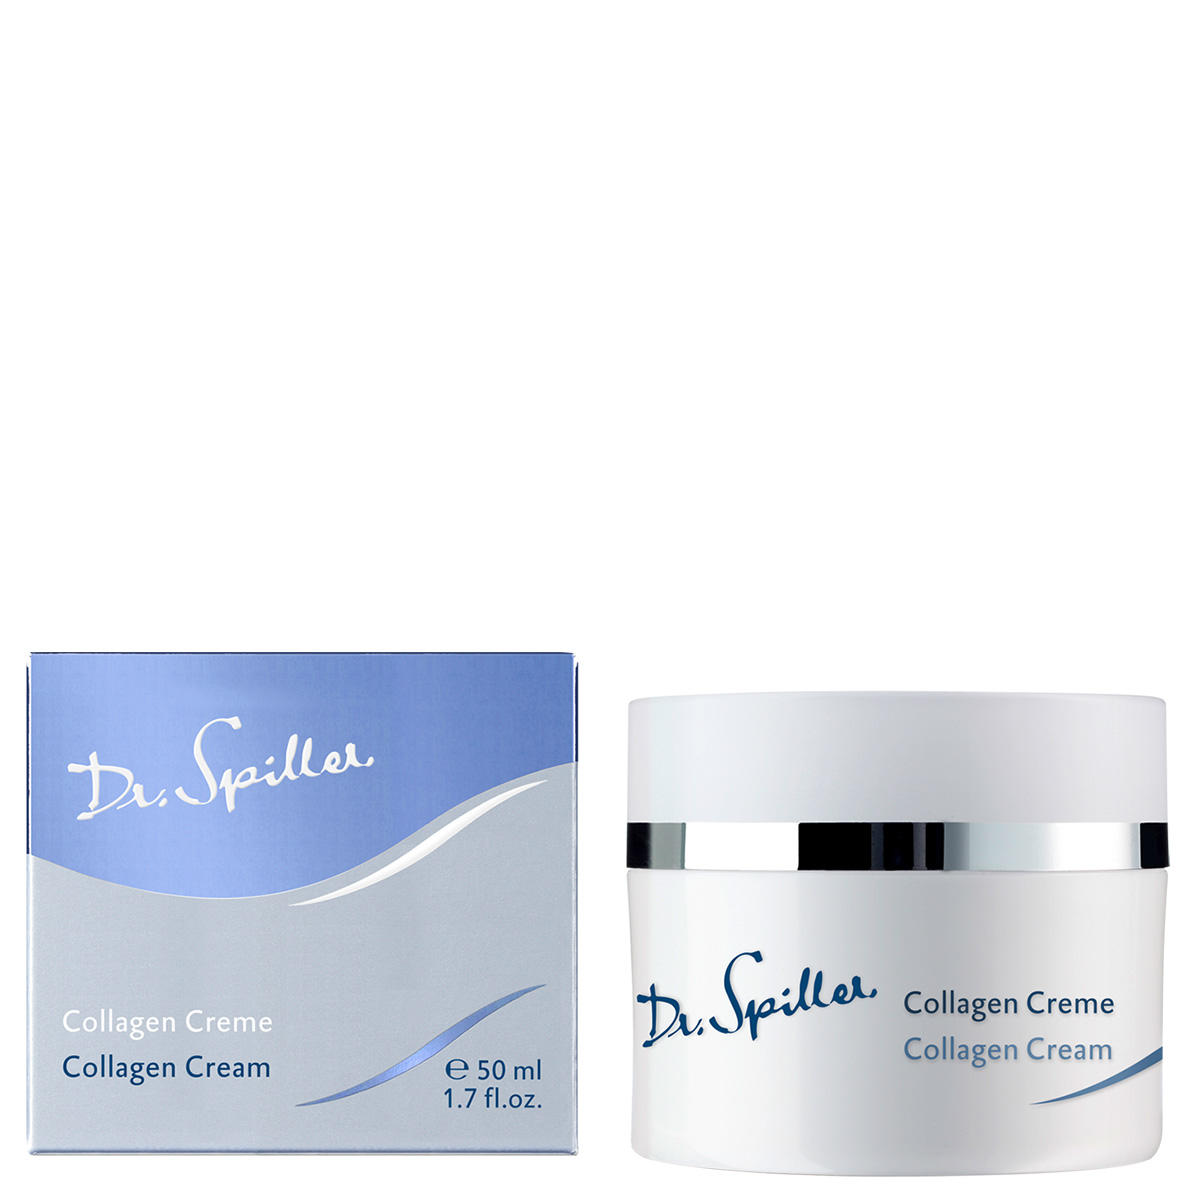 Dr. Spiller Collagen Creme 50 ml - 2